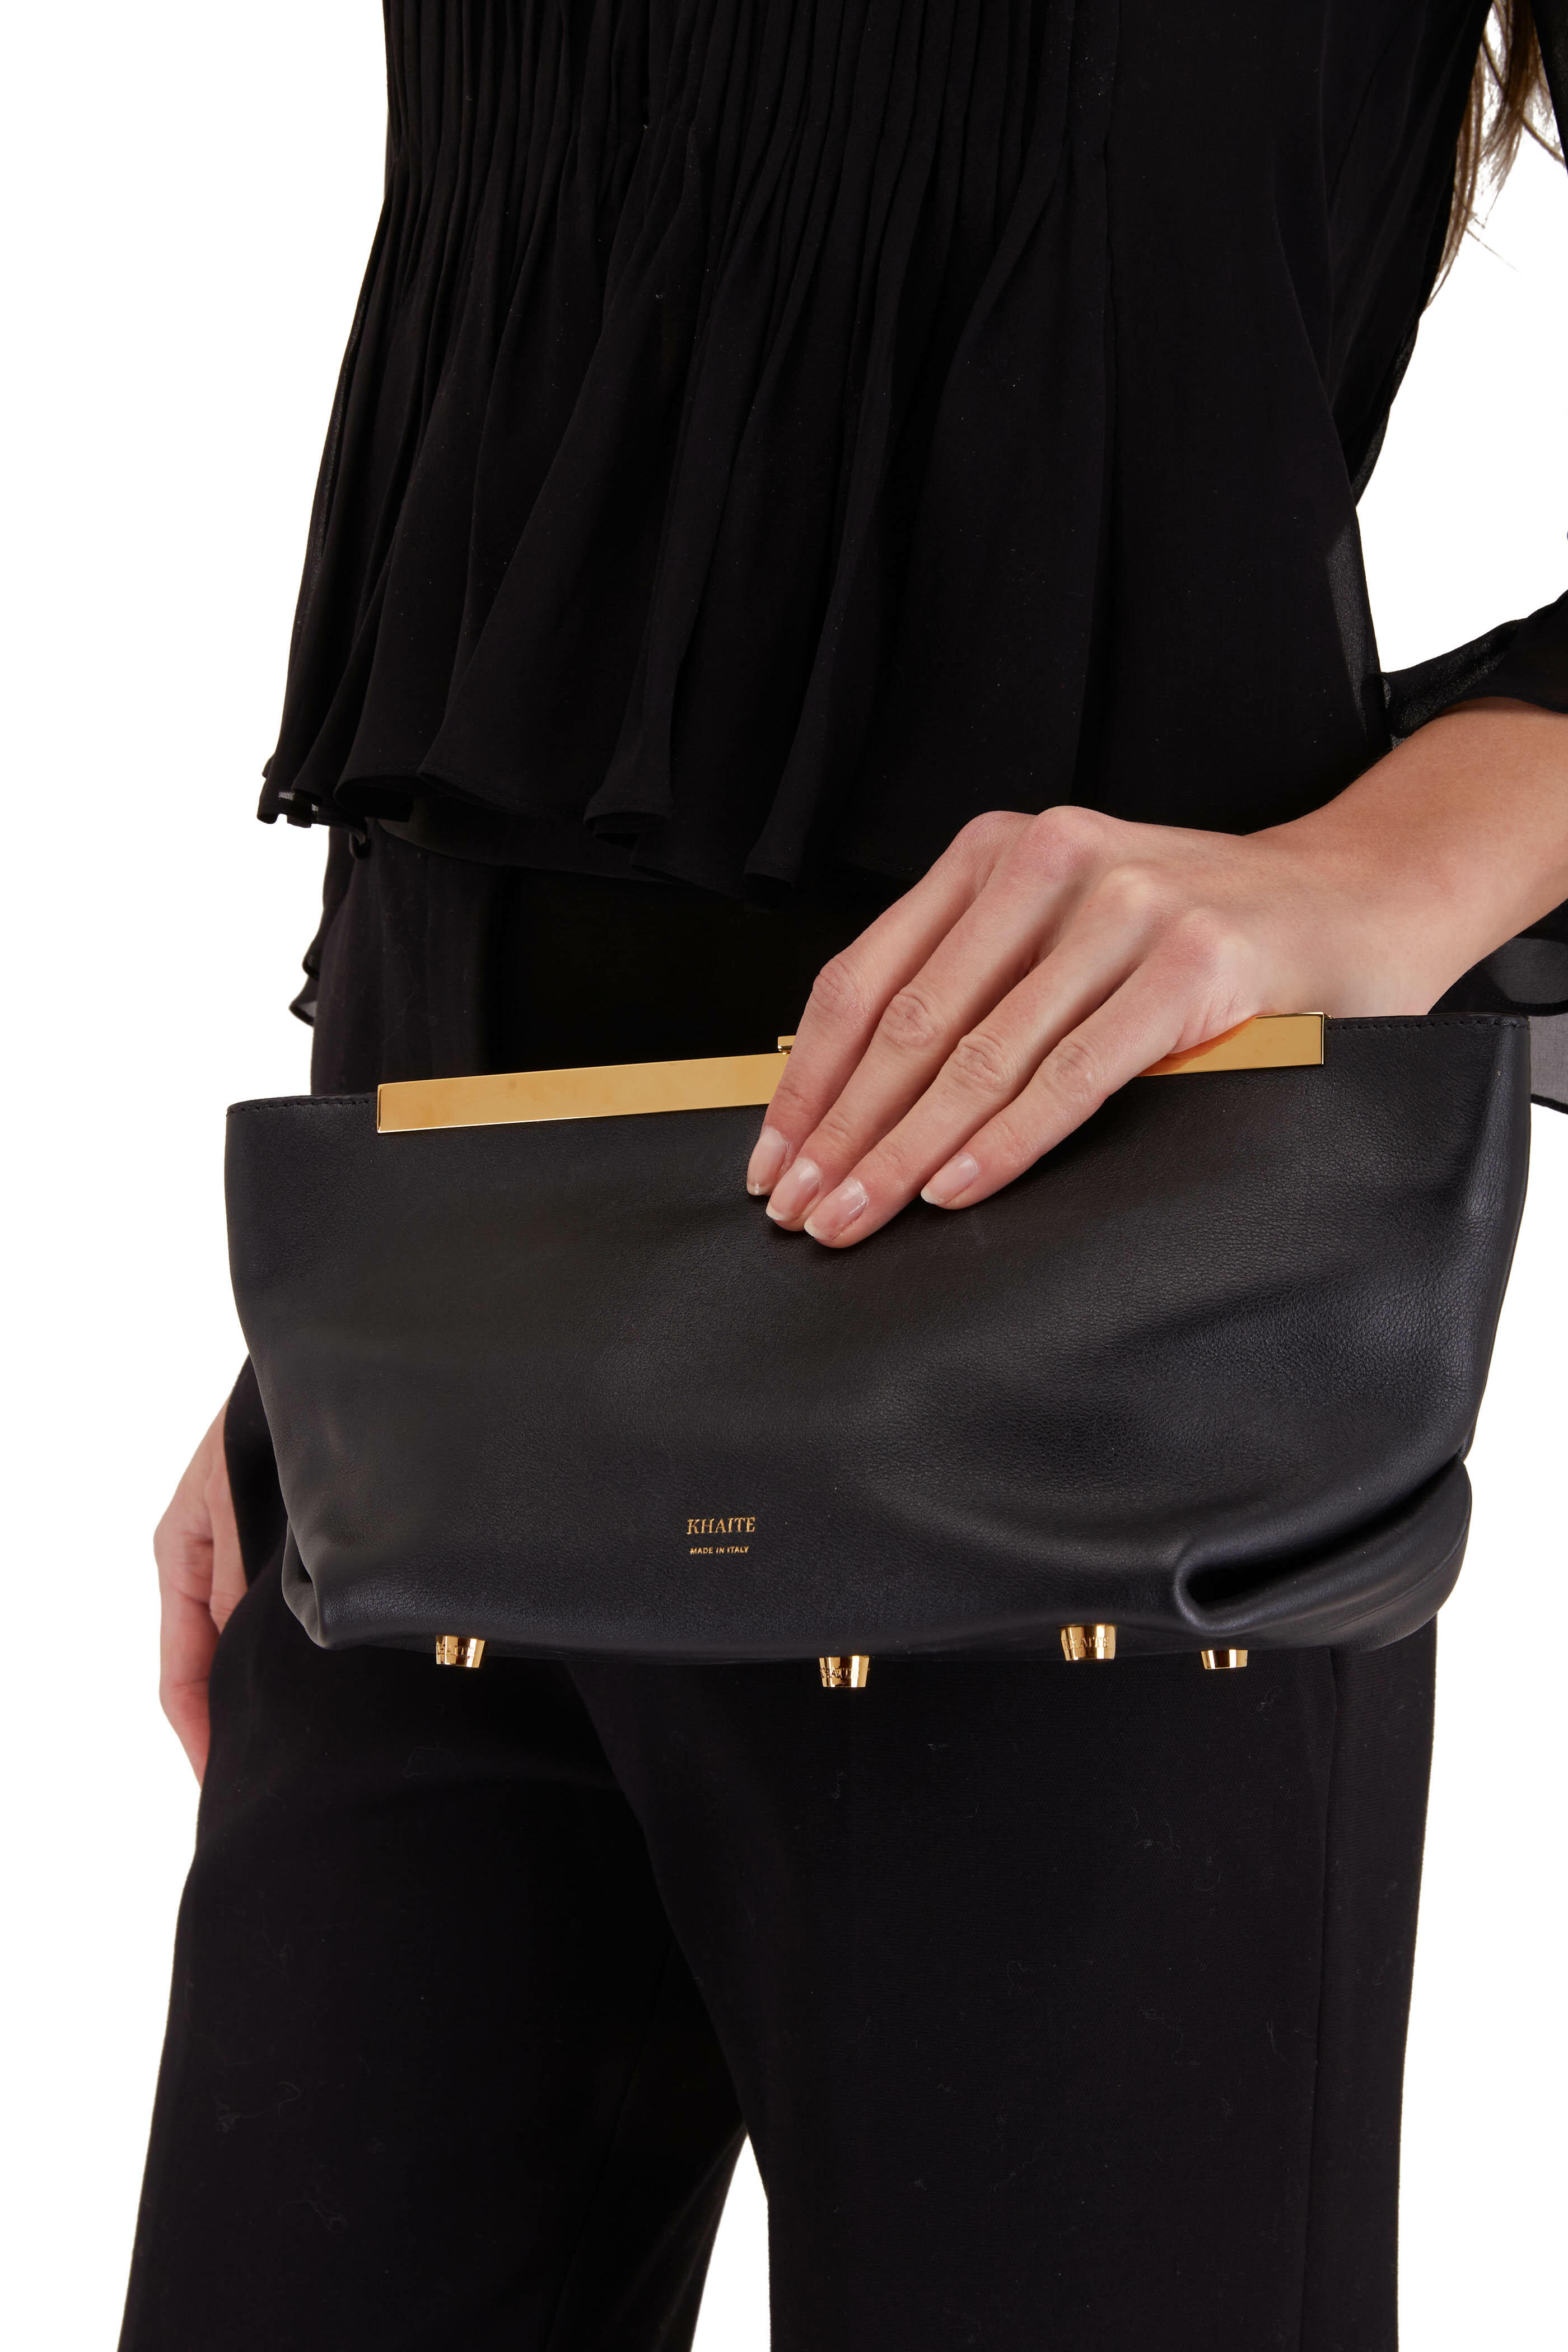 Mai Soli Clutches : Buy Mai Soli Claire Leather Mini Envelope Clutch -  Black Online